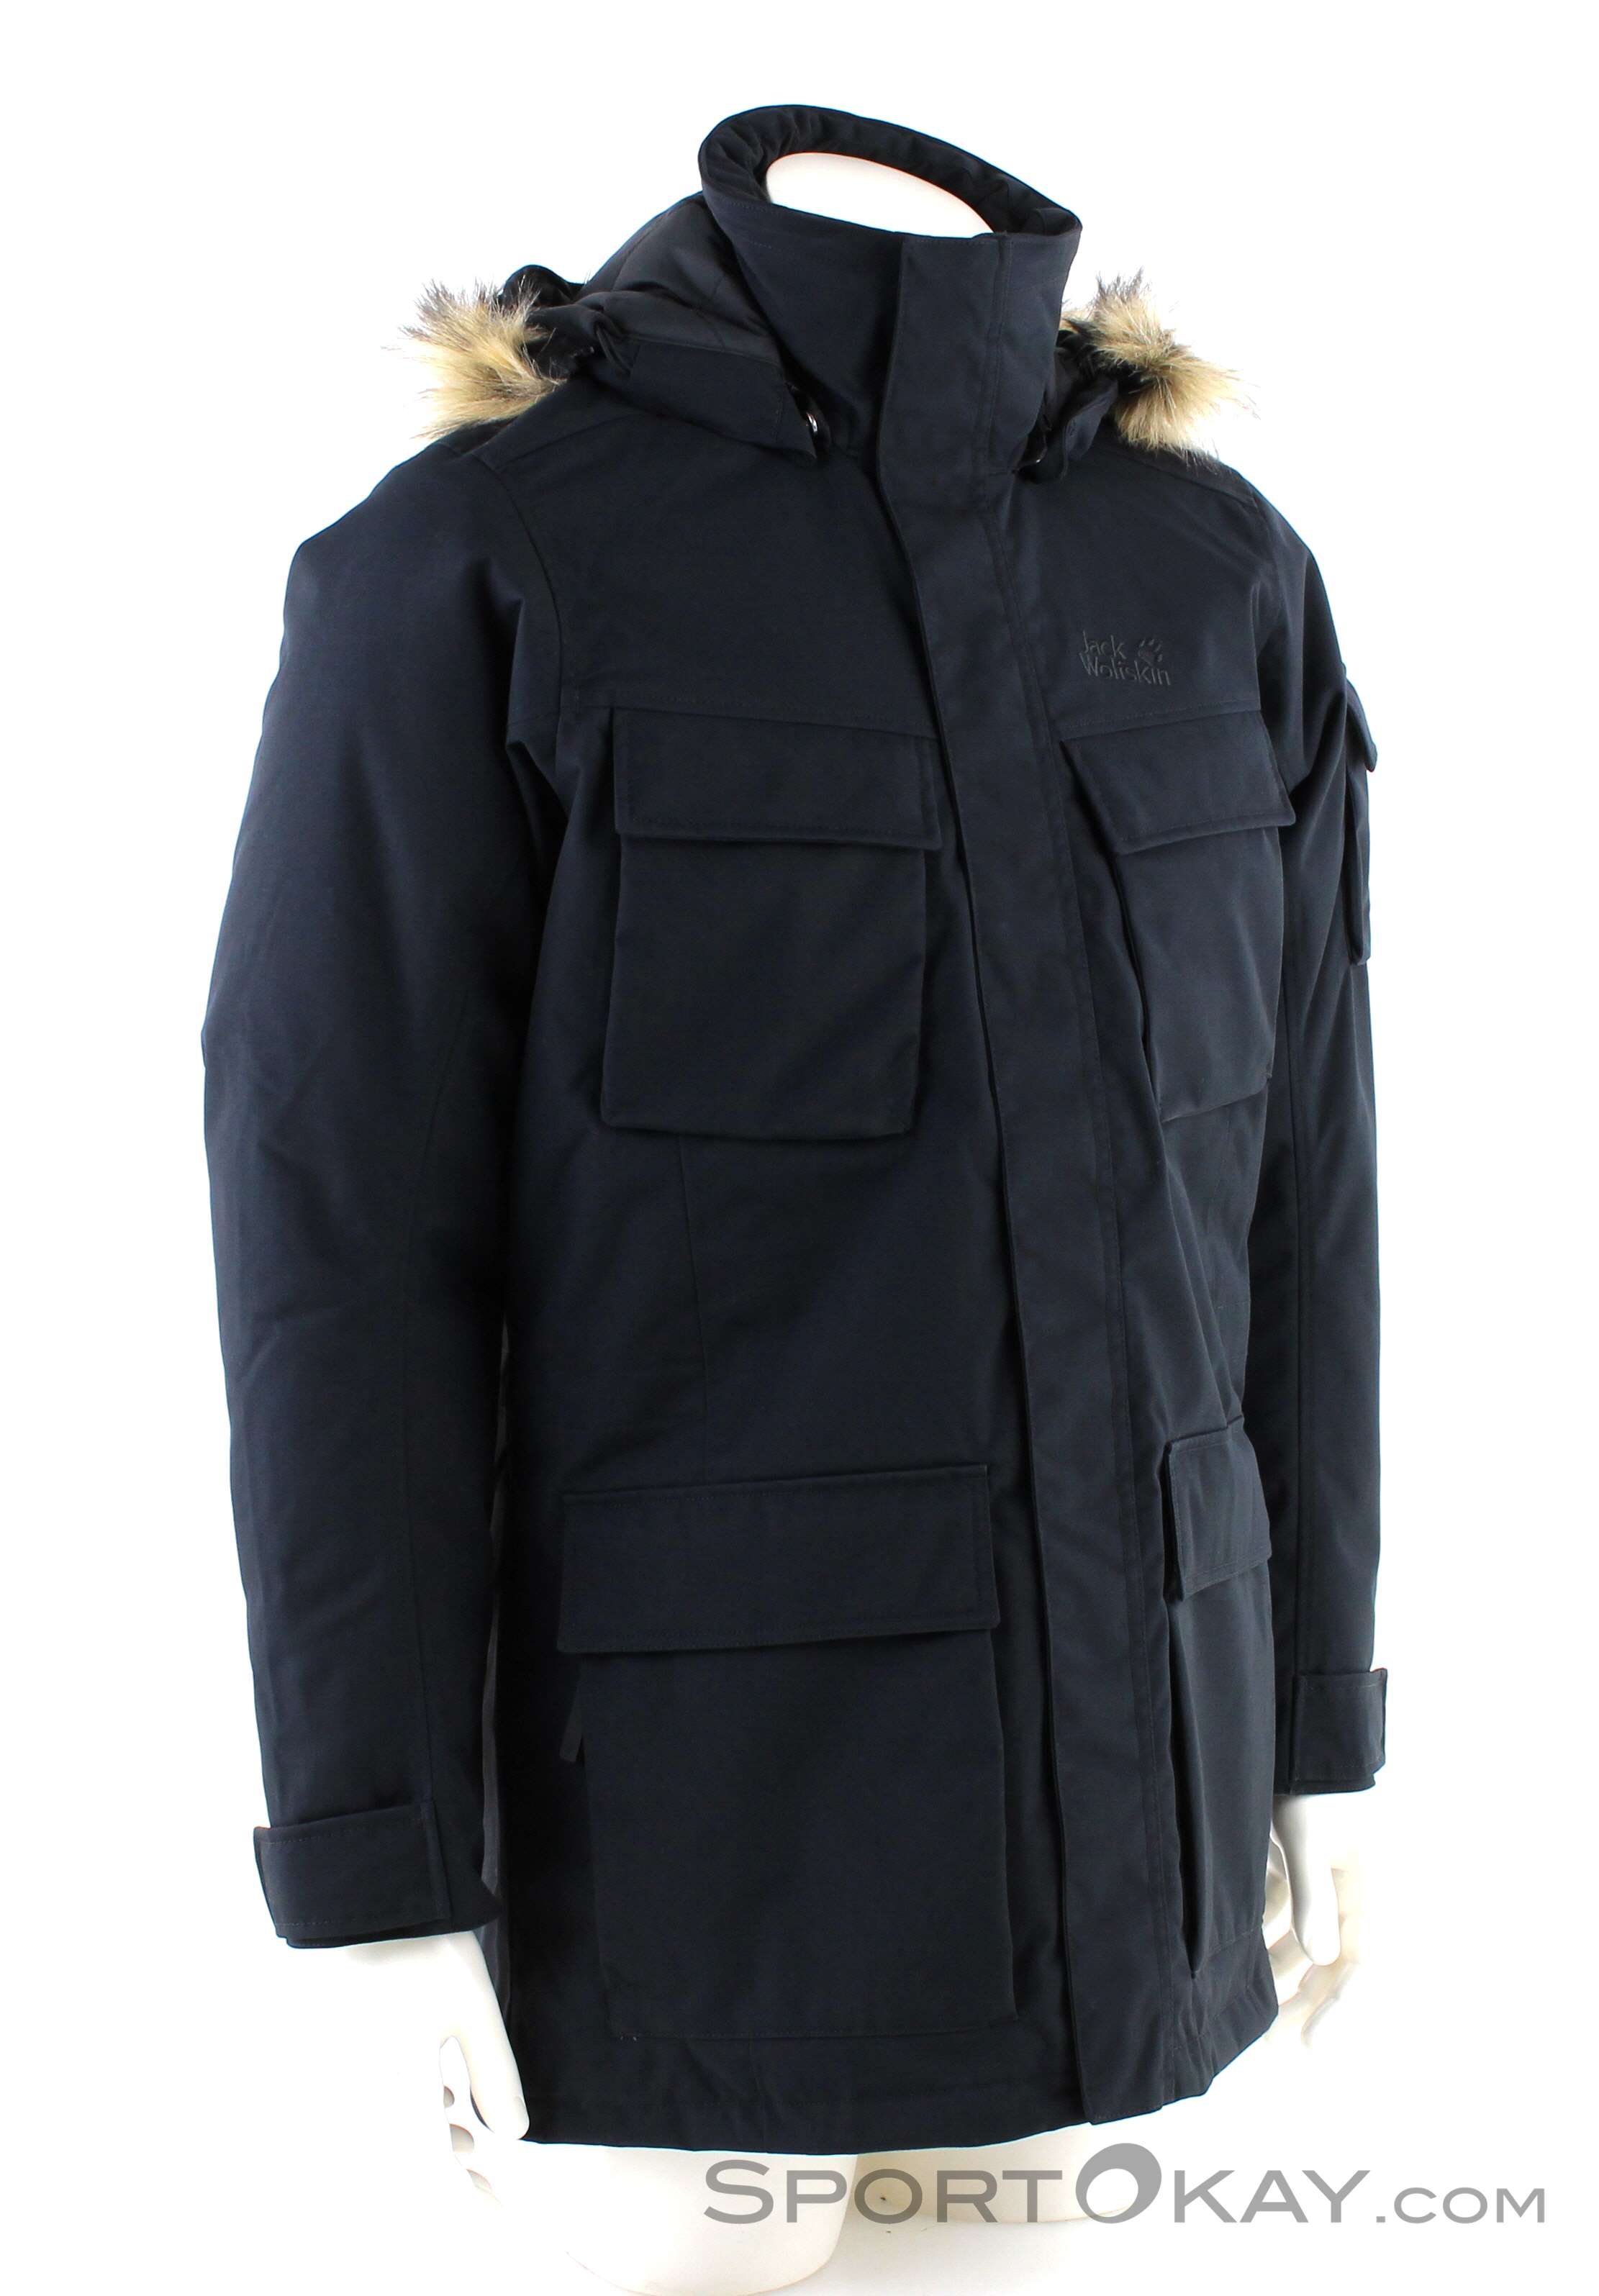 - Canyon Leisure Glacier Mens Parka - Fashion All Clothing Jack - Wolfskin Jackets - Coat